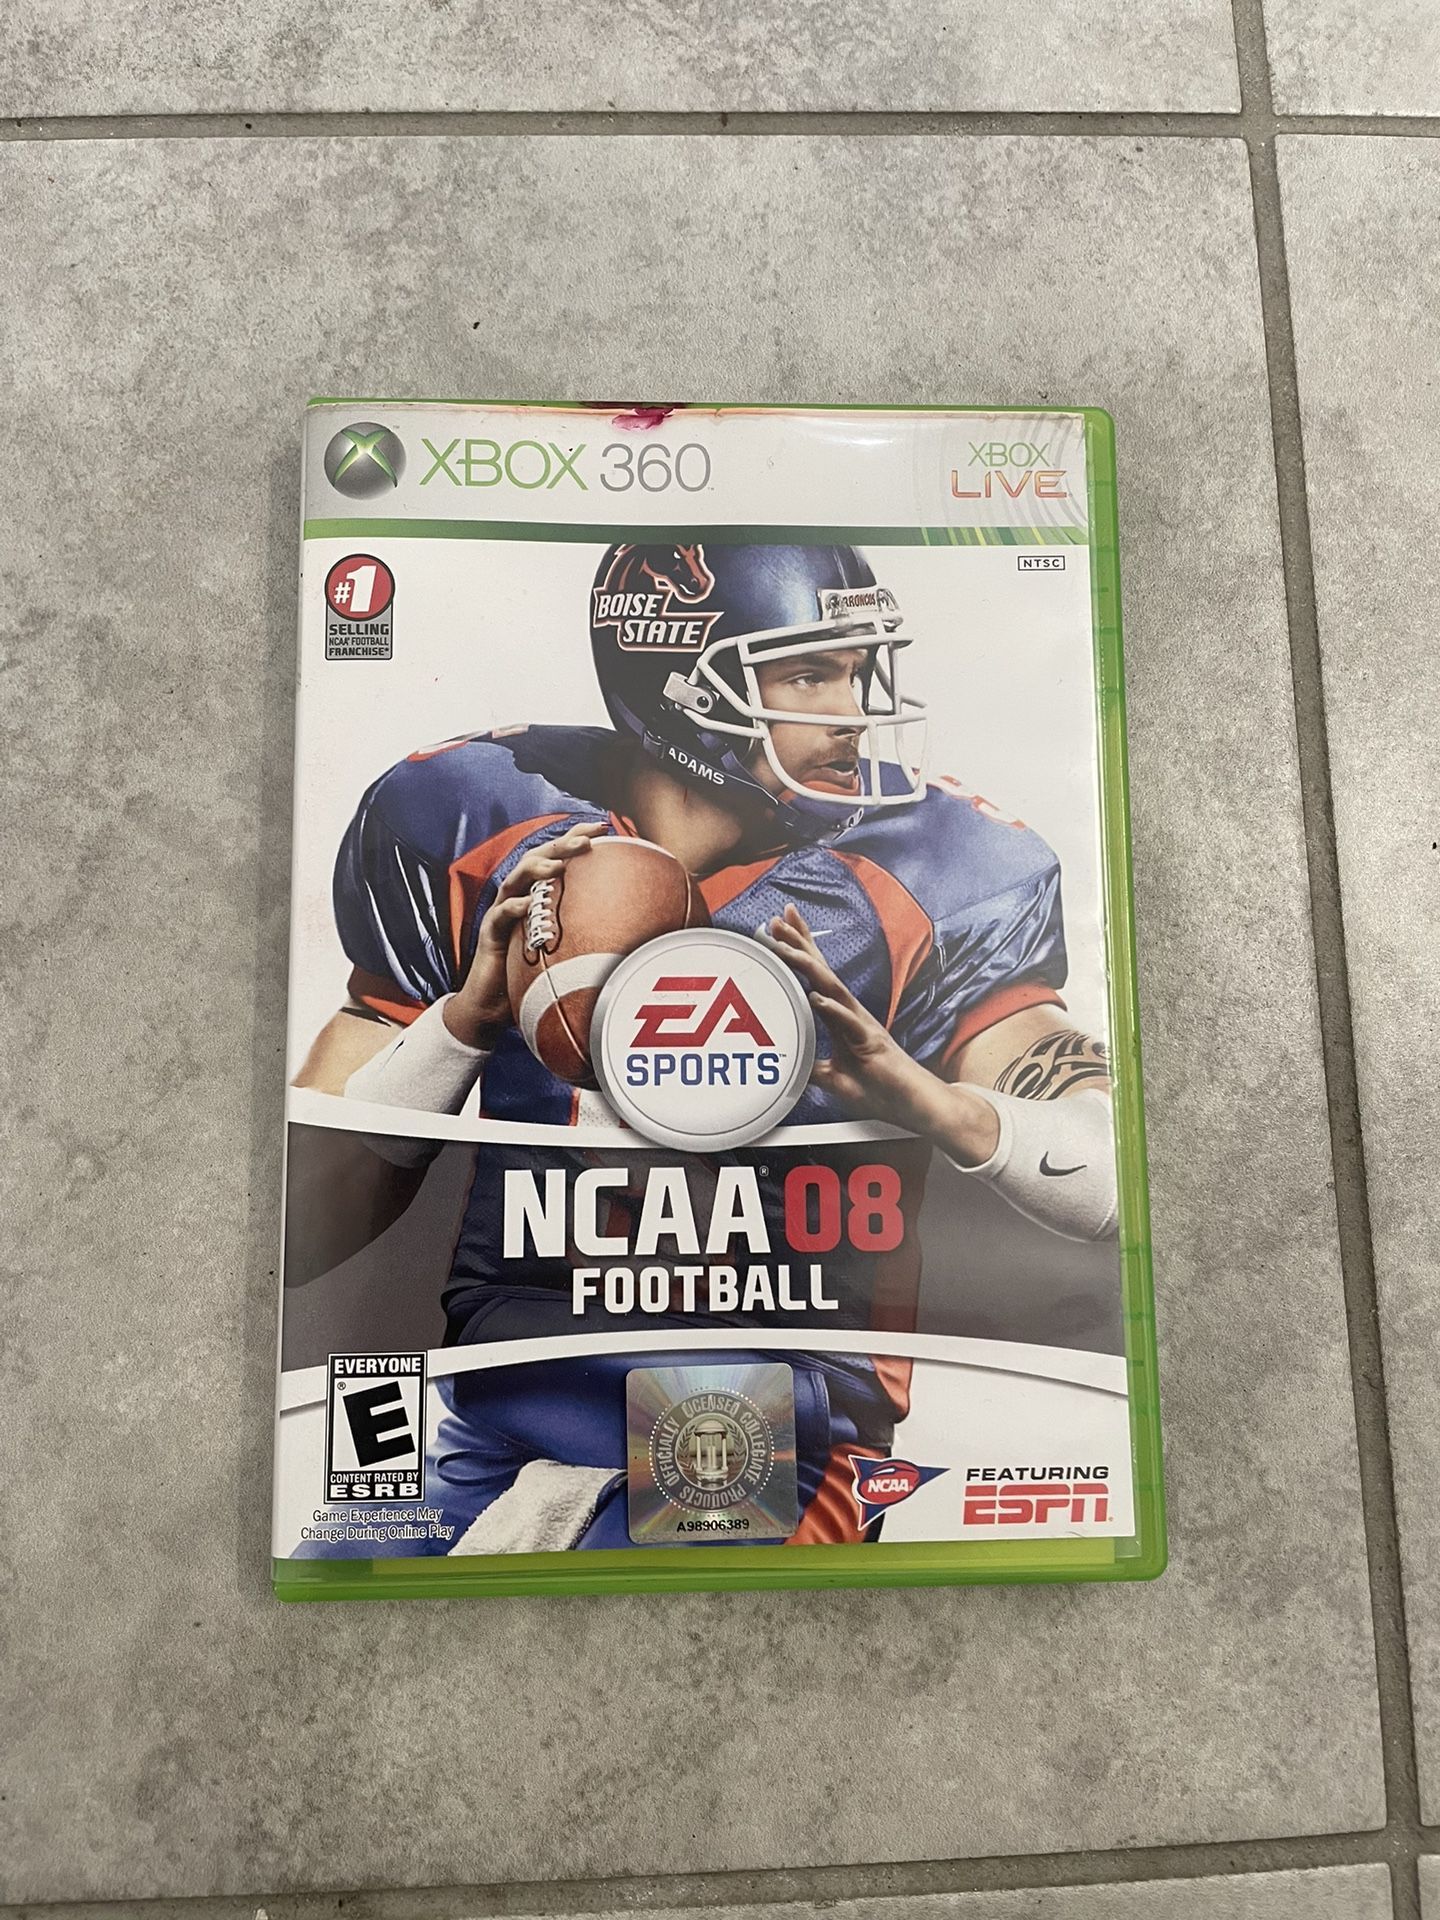 07’ Xbox 360 “NCAA 08 Football” Game